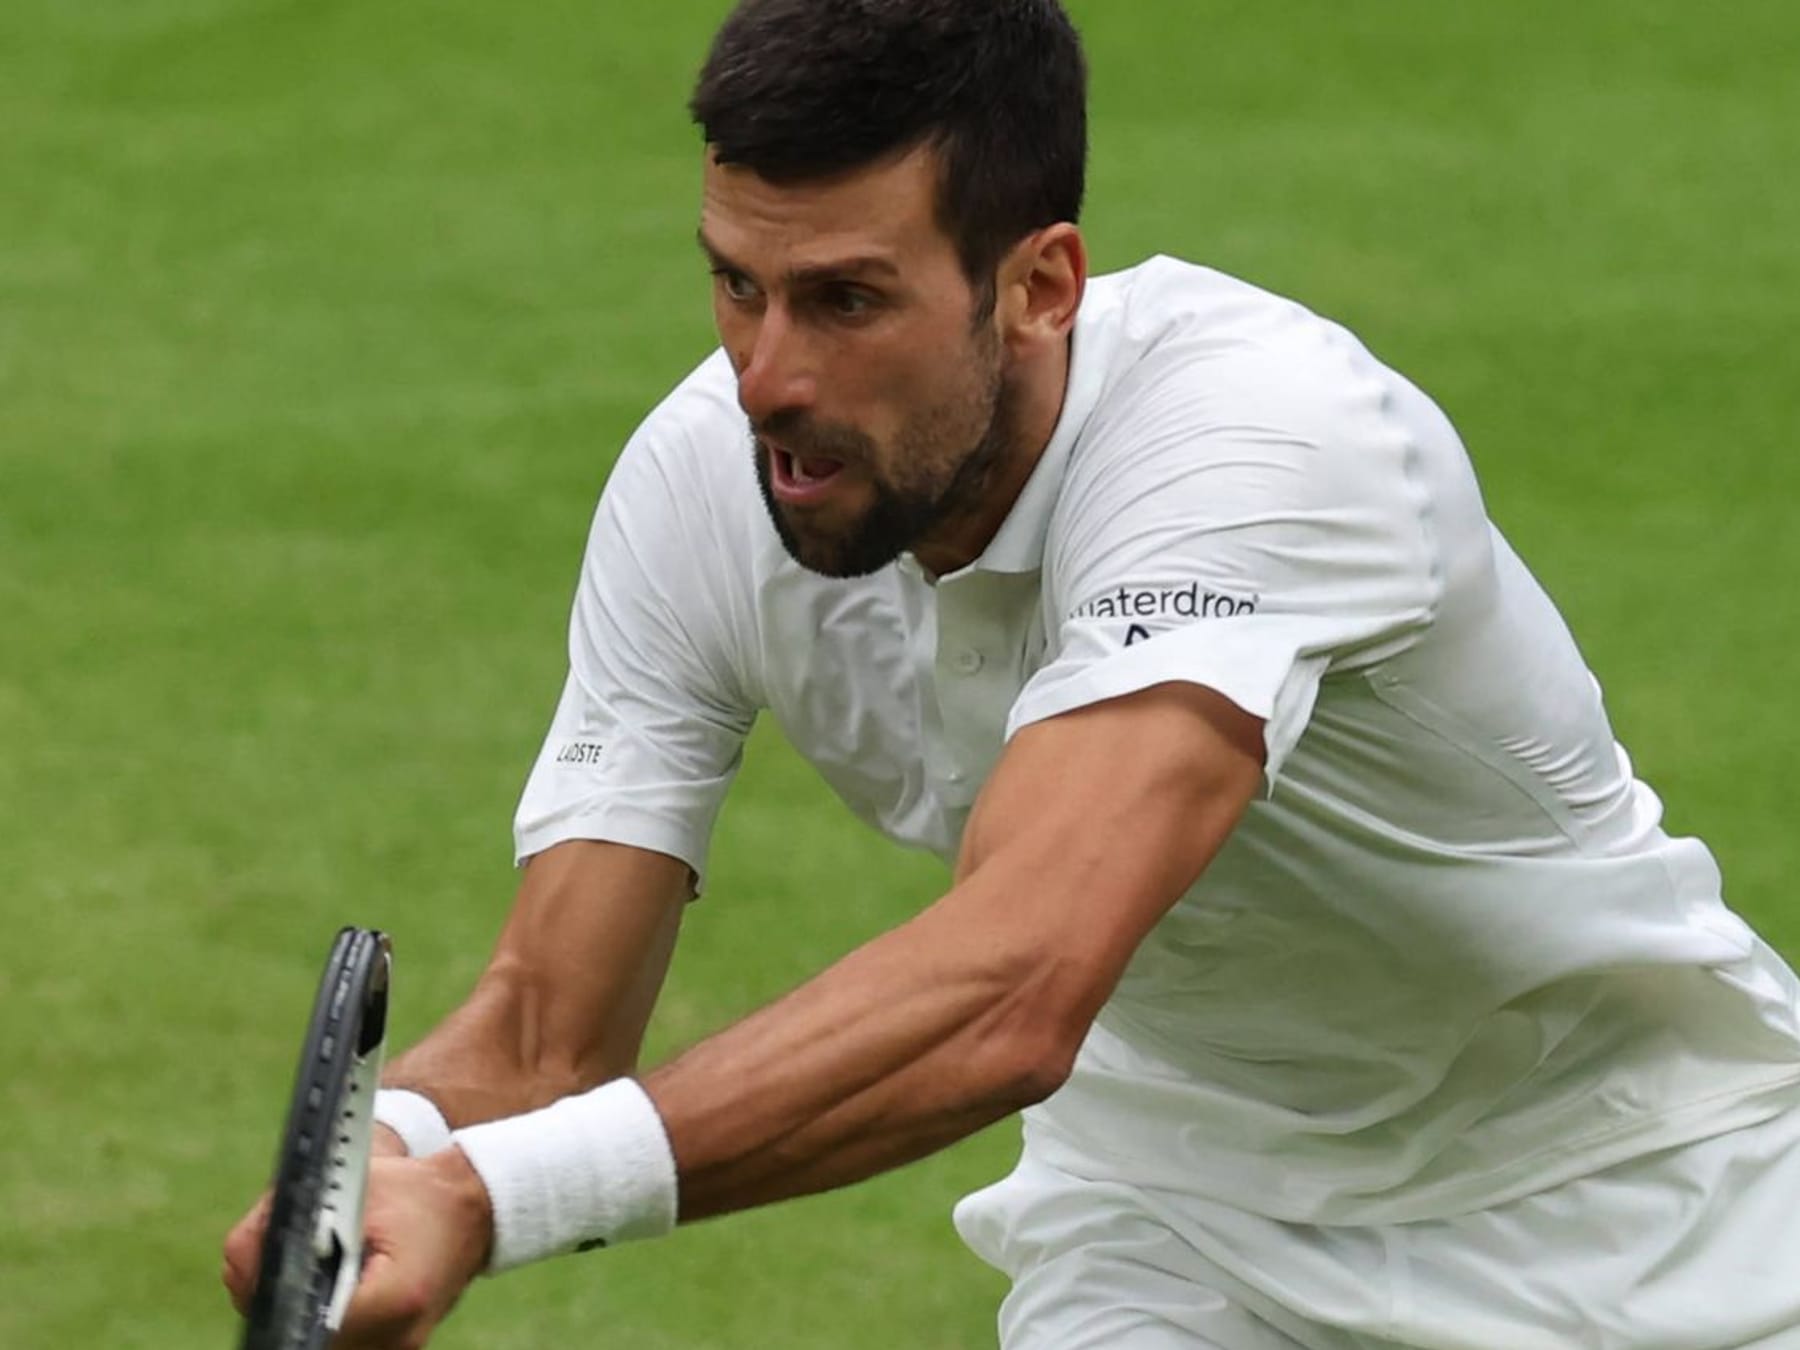 Wimbledon Traumfinale zwischen Carlos Alcaraz und Novak Djokovic